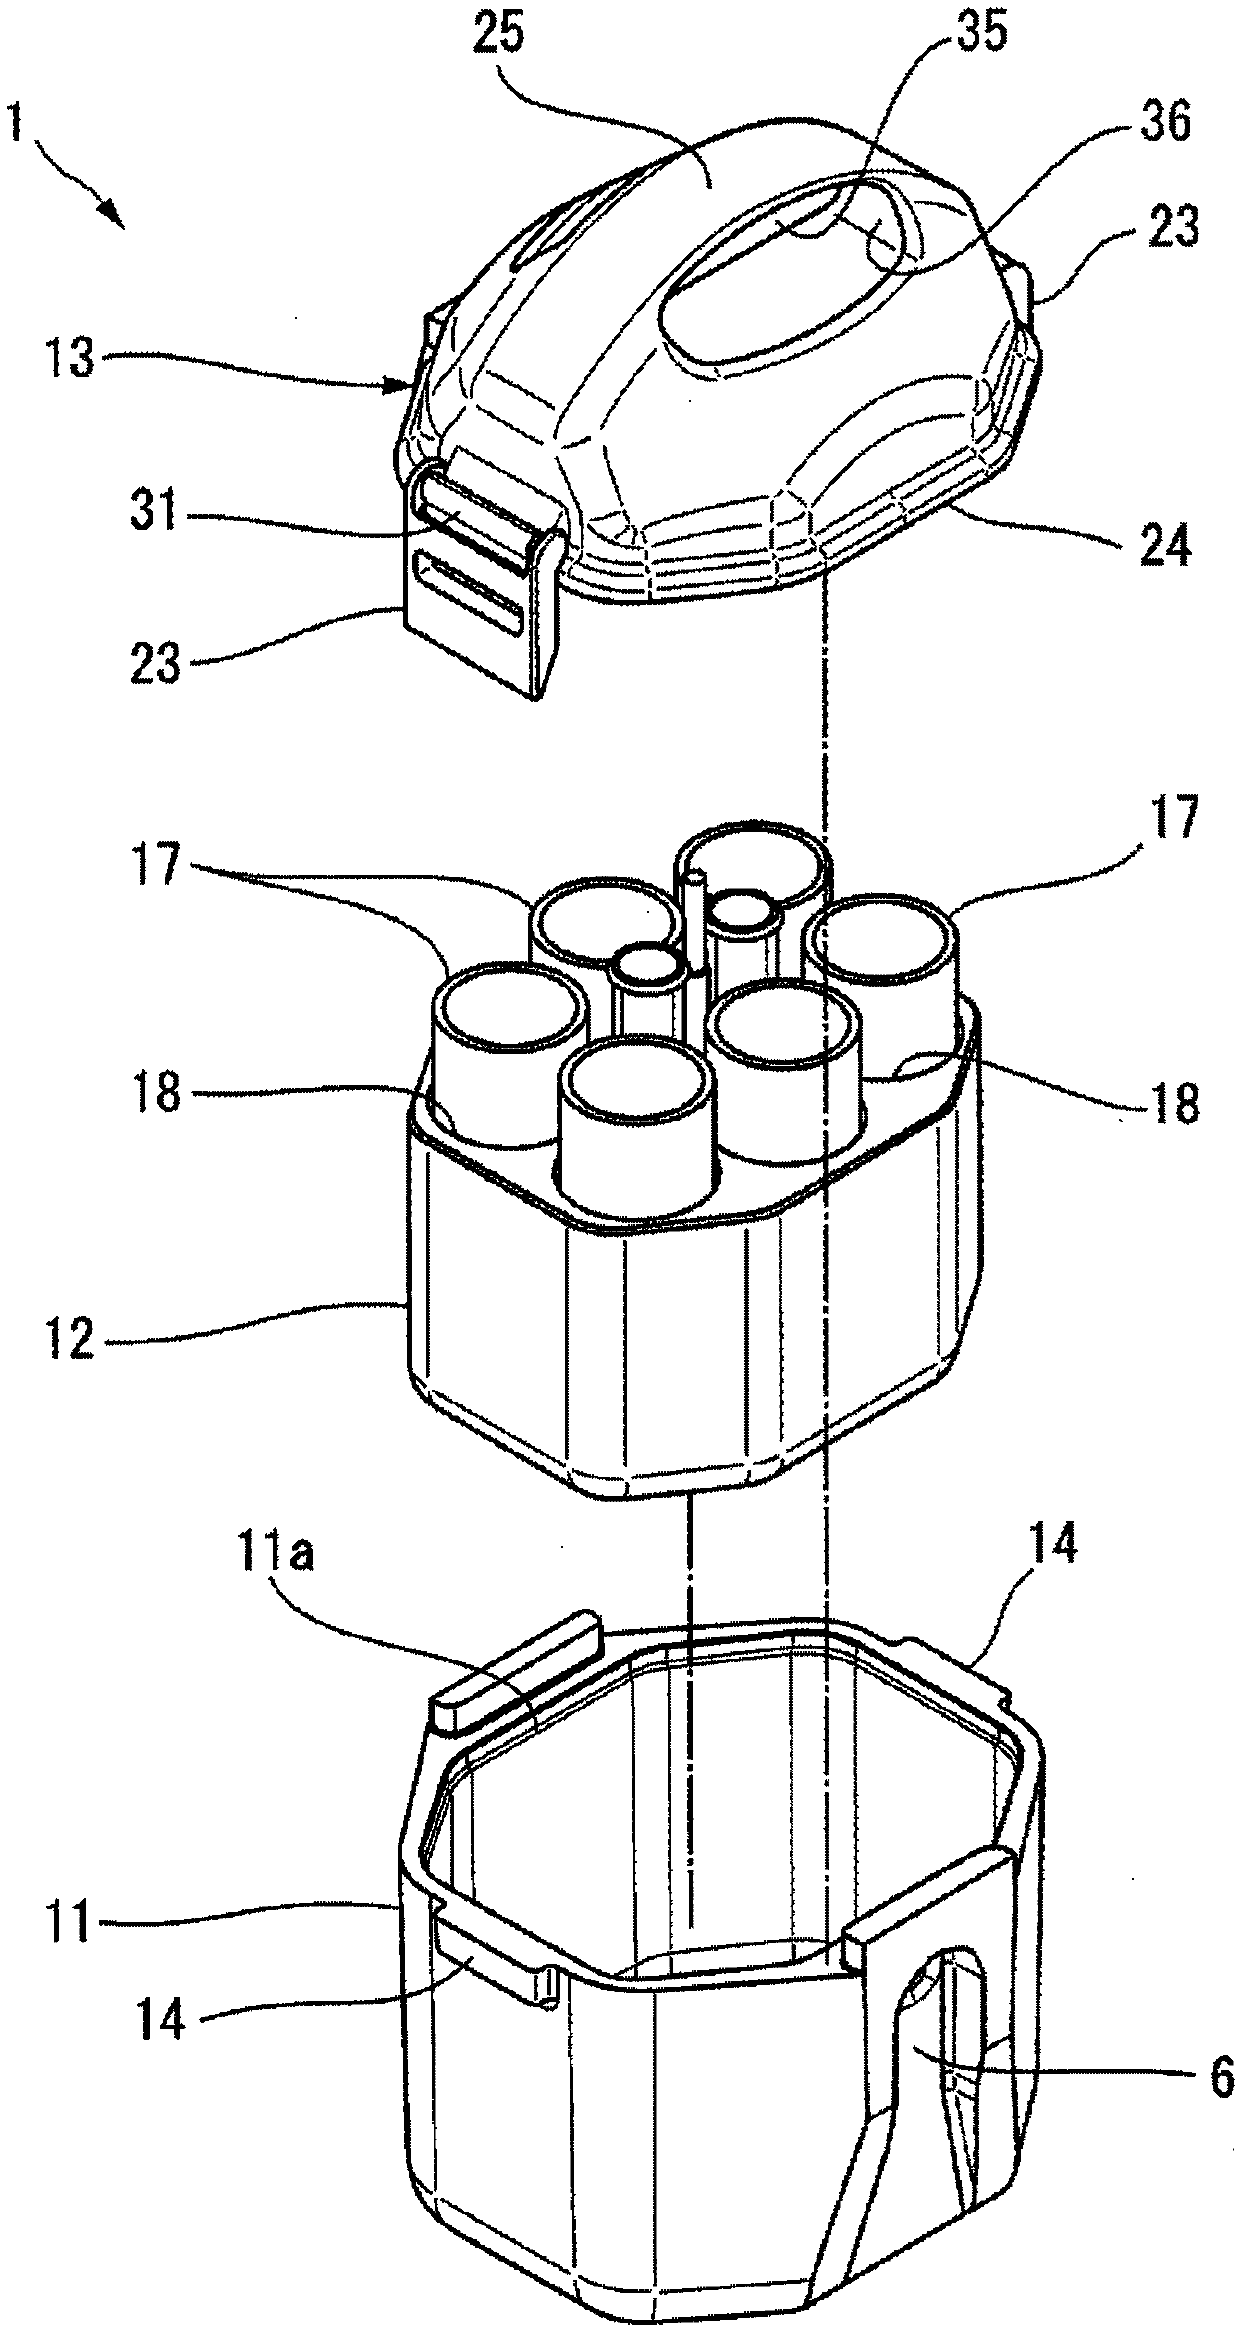 Bucket for swinging rotor of centrifugal separator